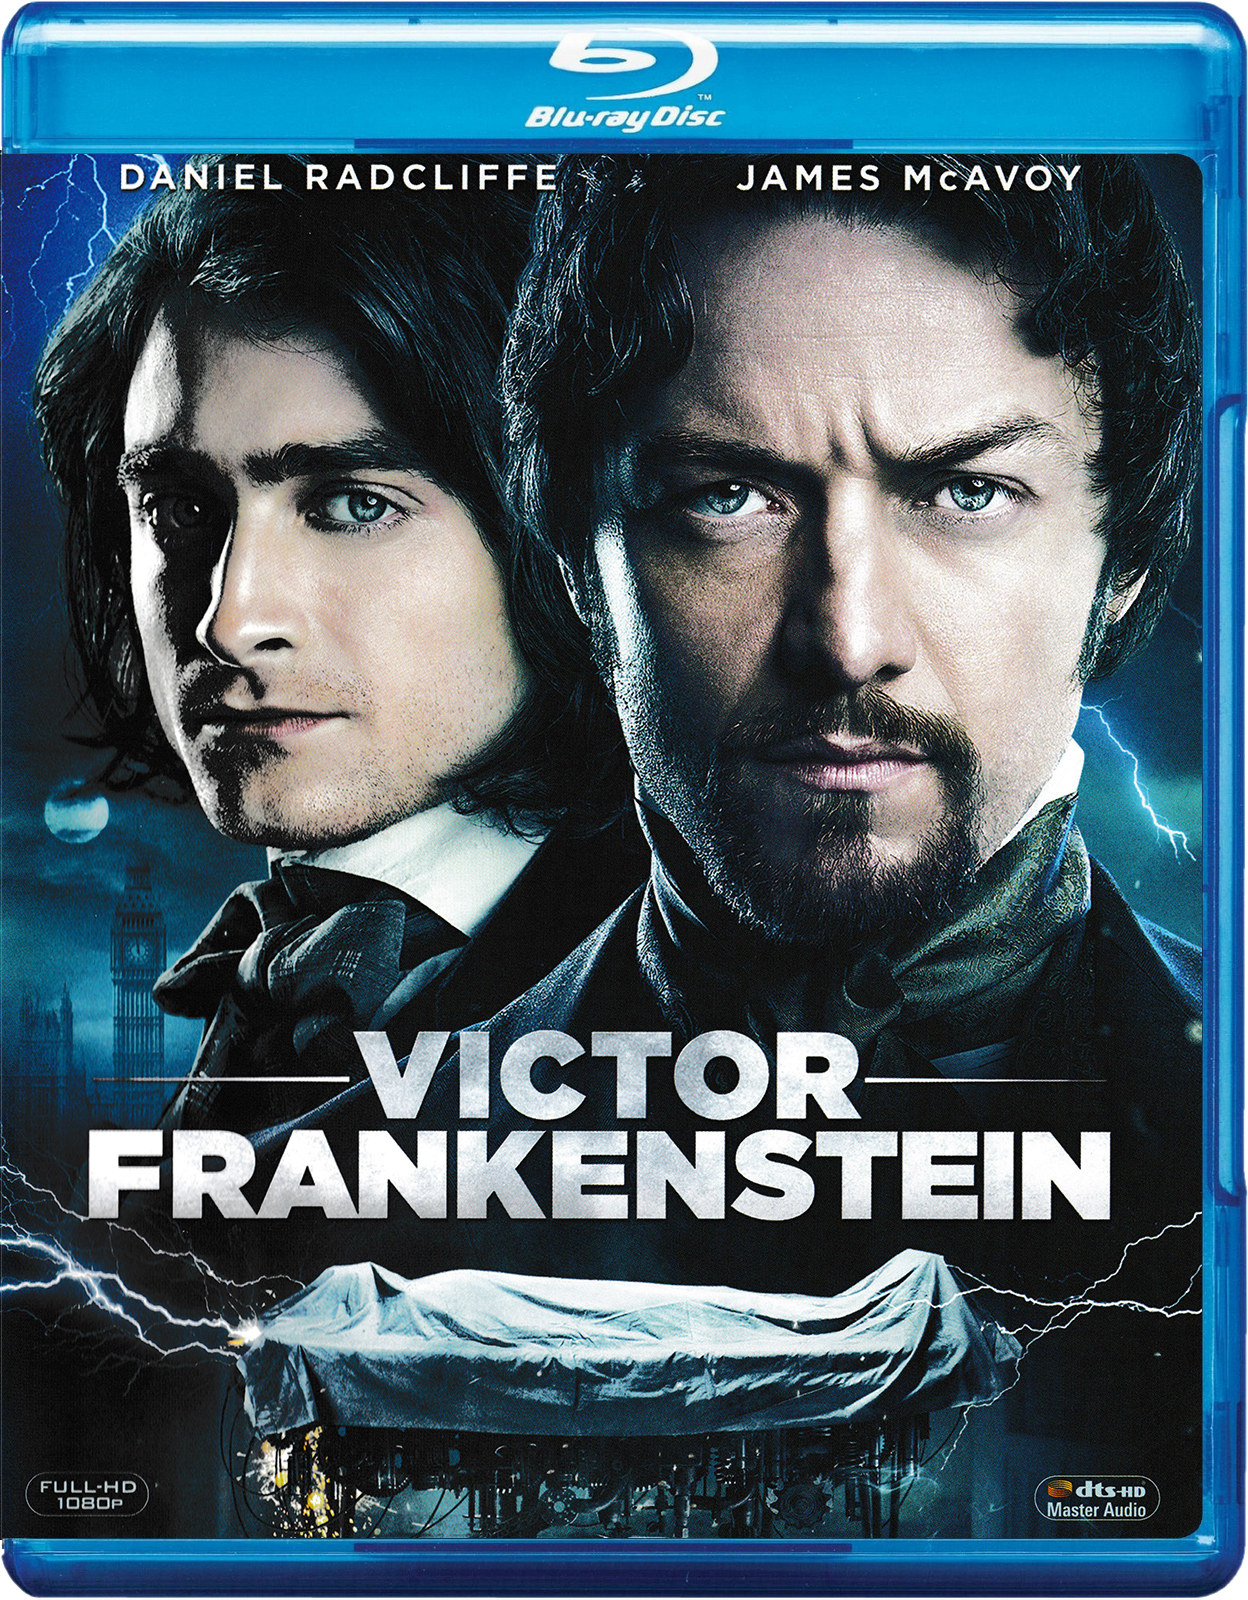 Stiahni si HD Filmy Viktor Frankenstein / Victor Frankenstein (2015)(CZ/EN)[1080pHD] = CSFD 55%